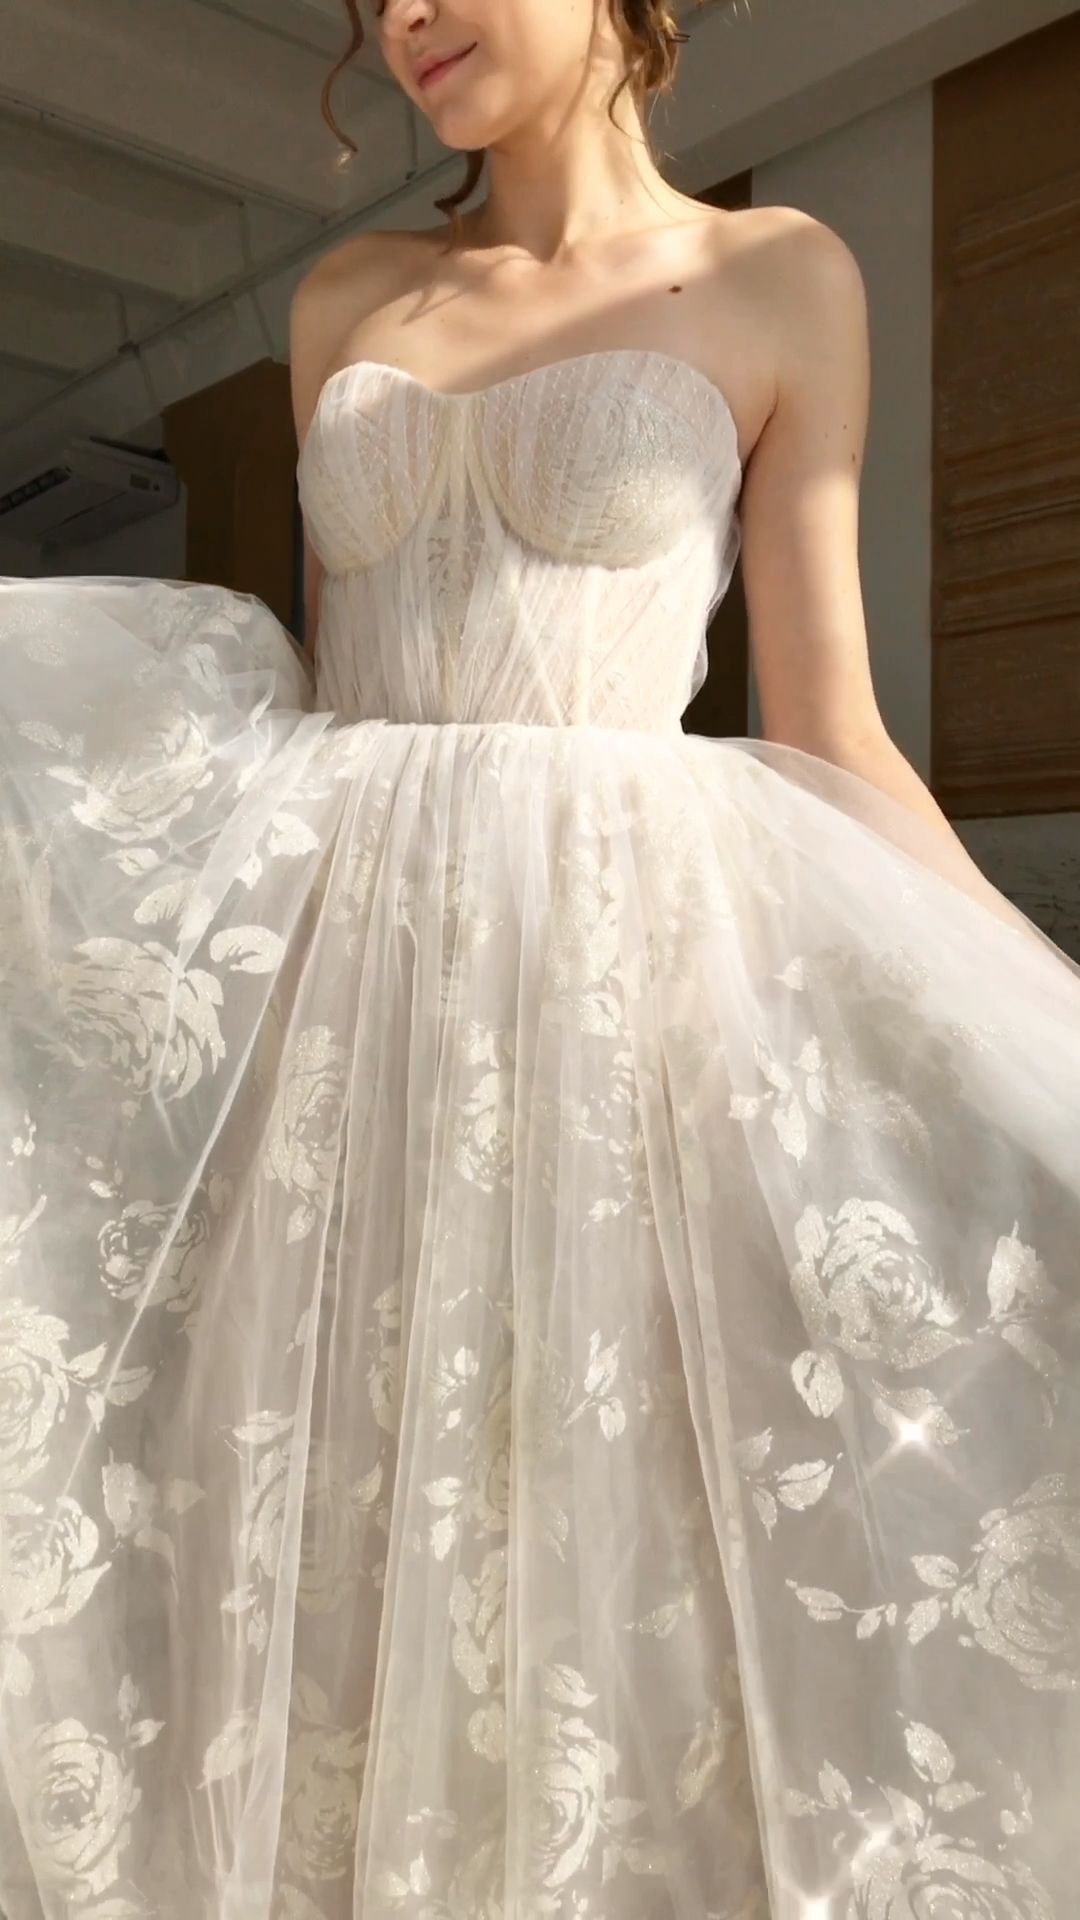 Shimmer glitter wedding dress with roses -   18 wedding Dresses modern ideas